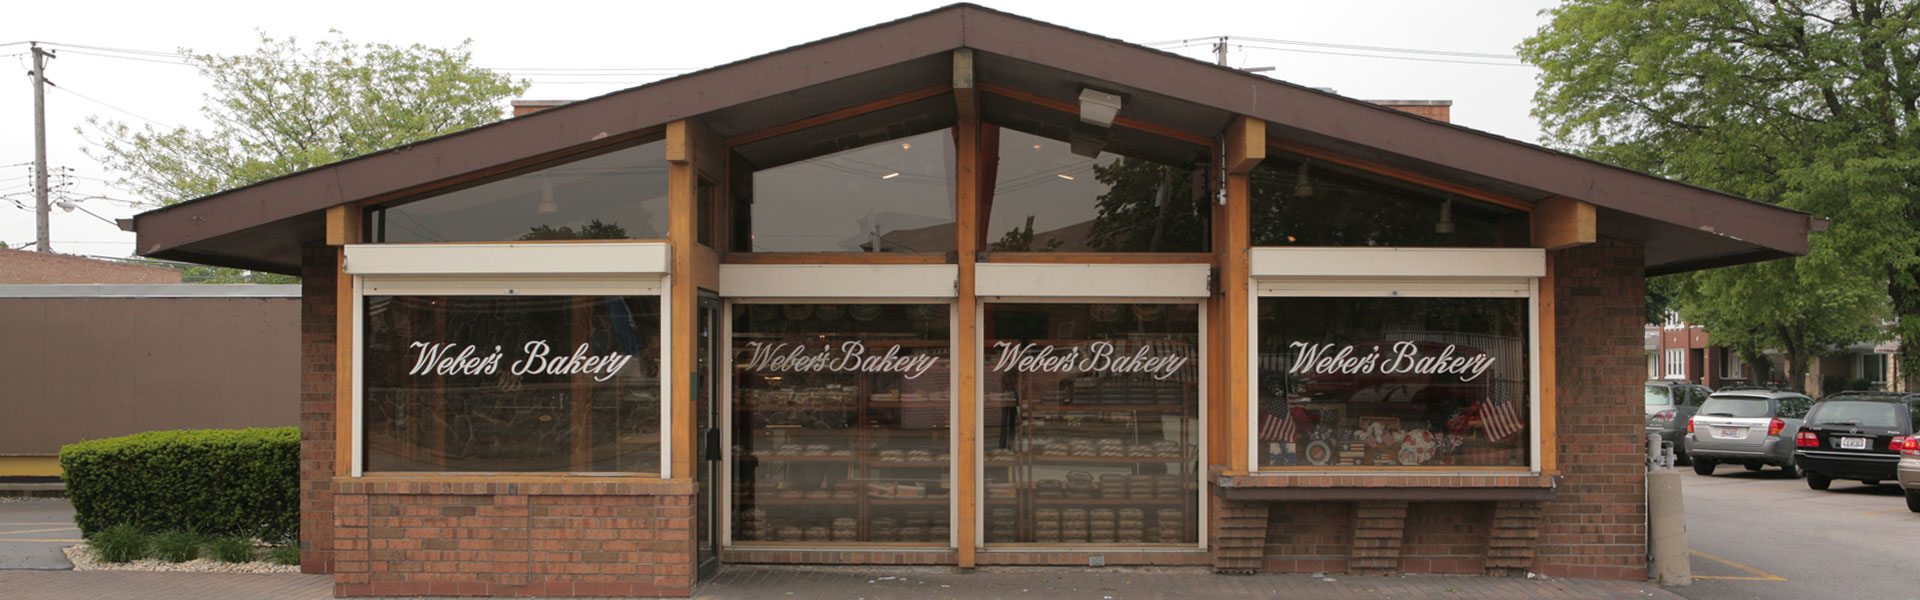 Weber's Bakery exterior